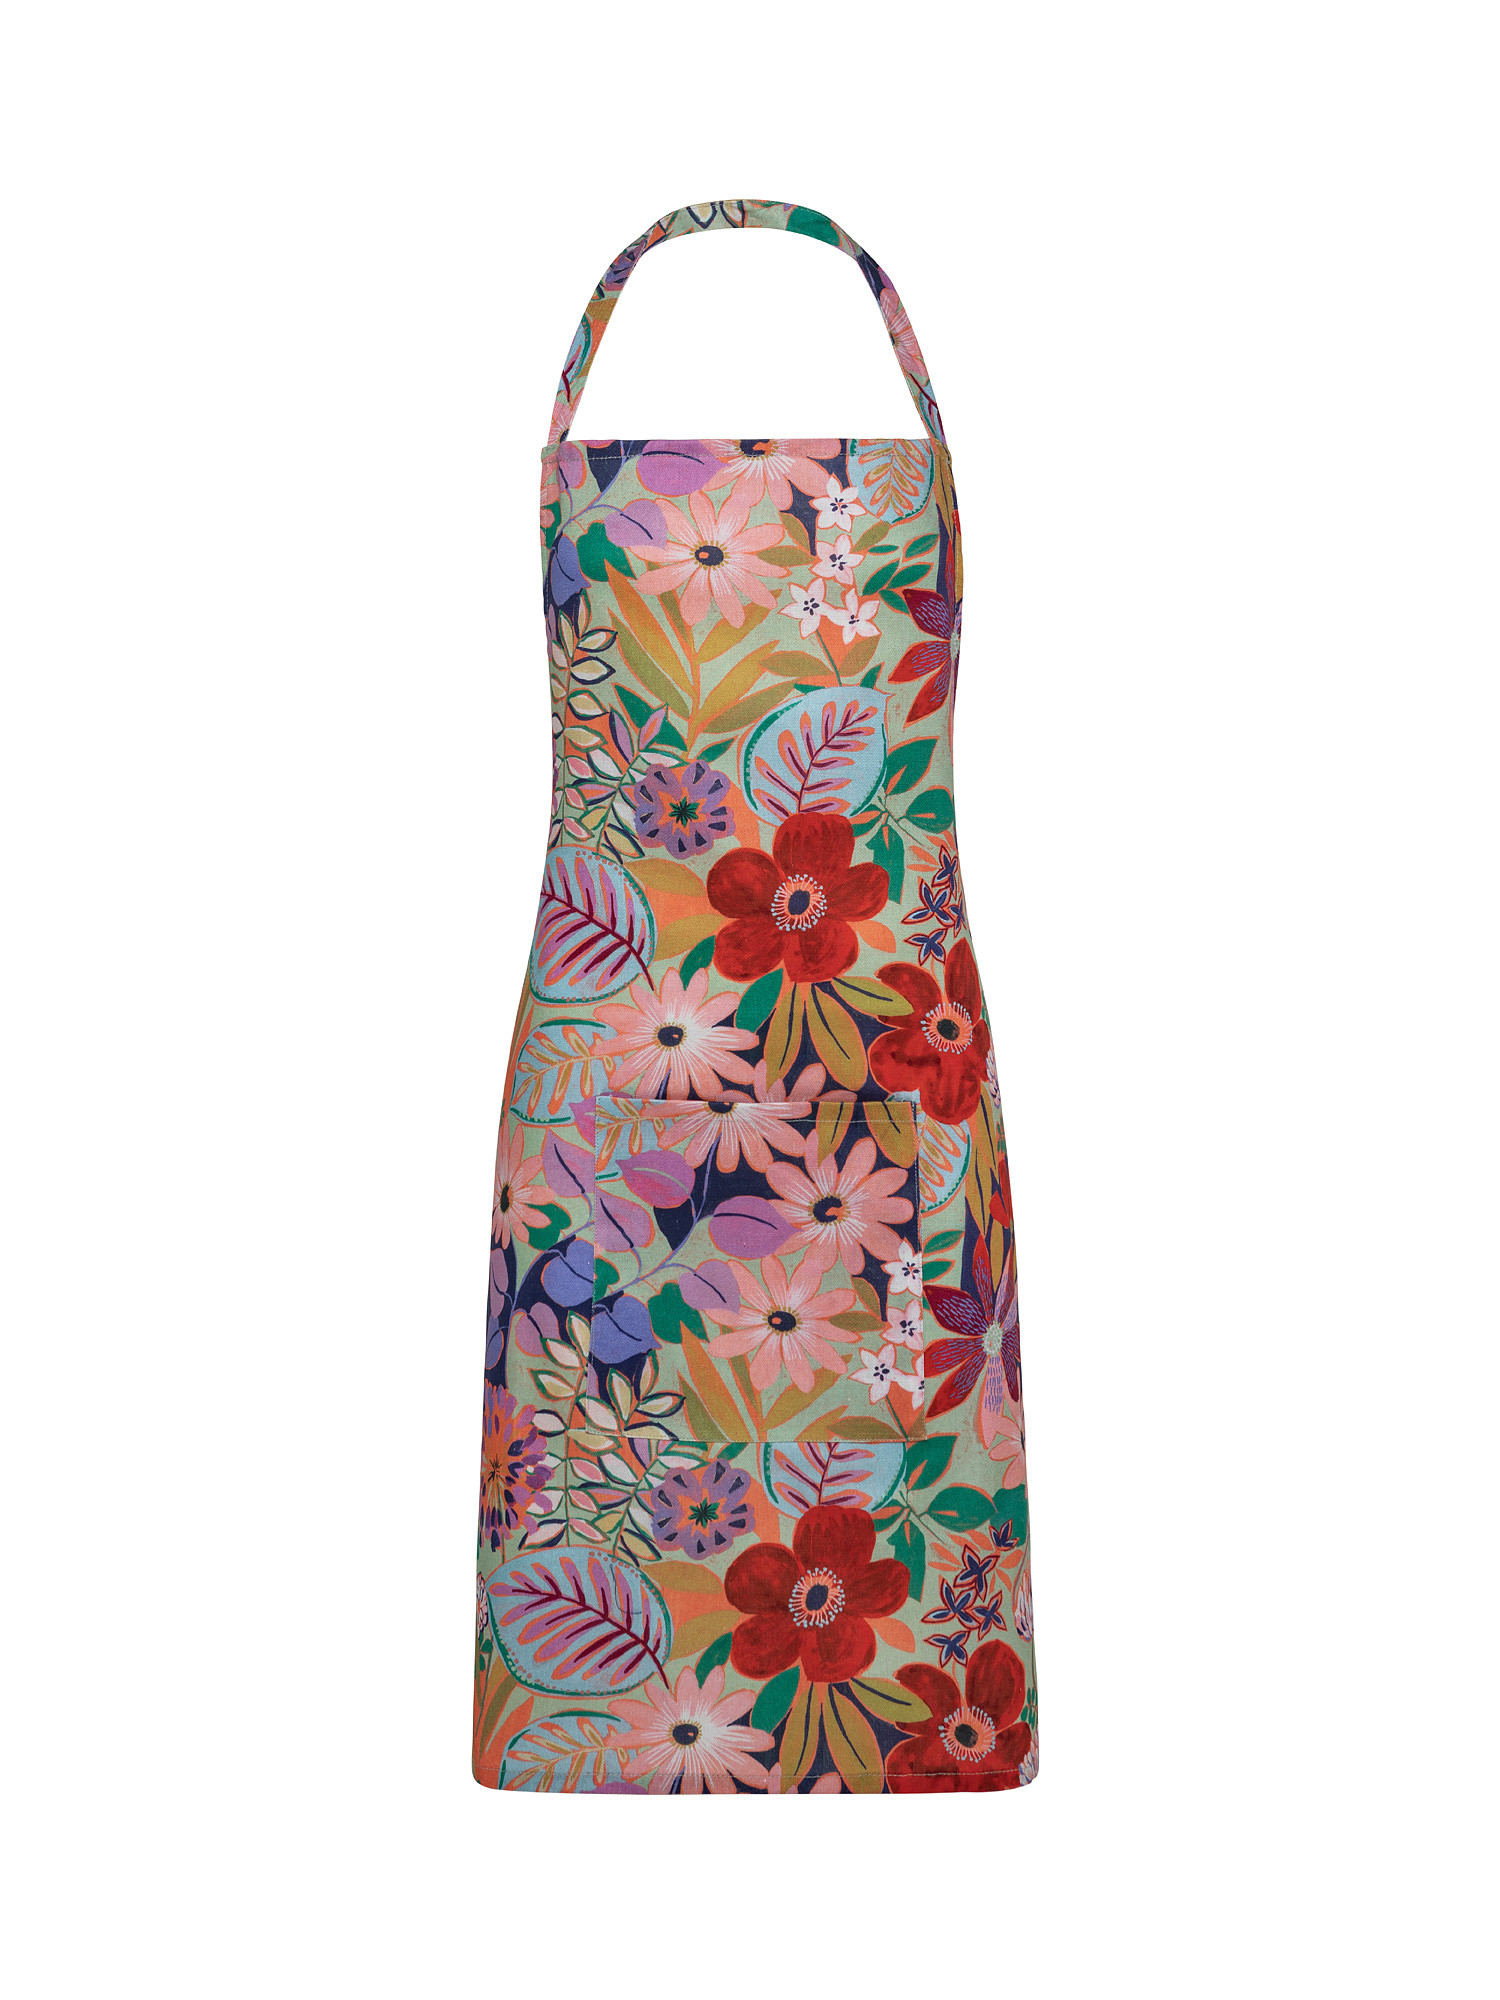 Grembiule da cucina panama di cotone stampa floreale, Multicolor, large image number 0